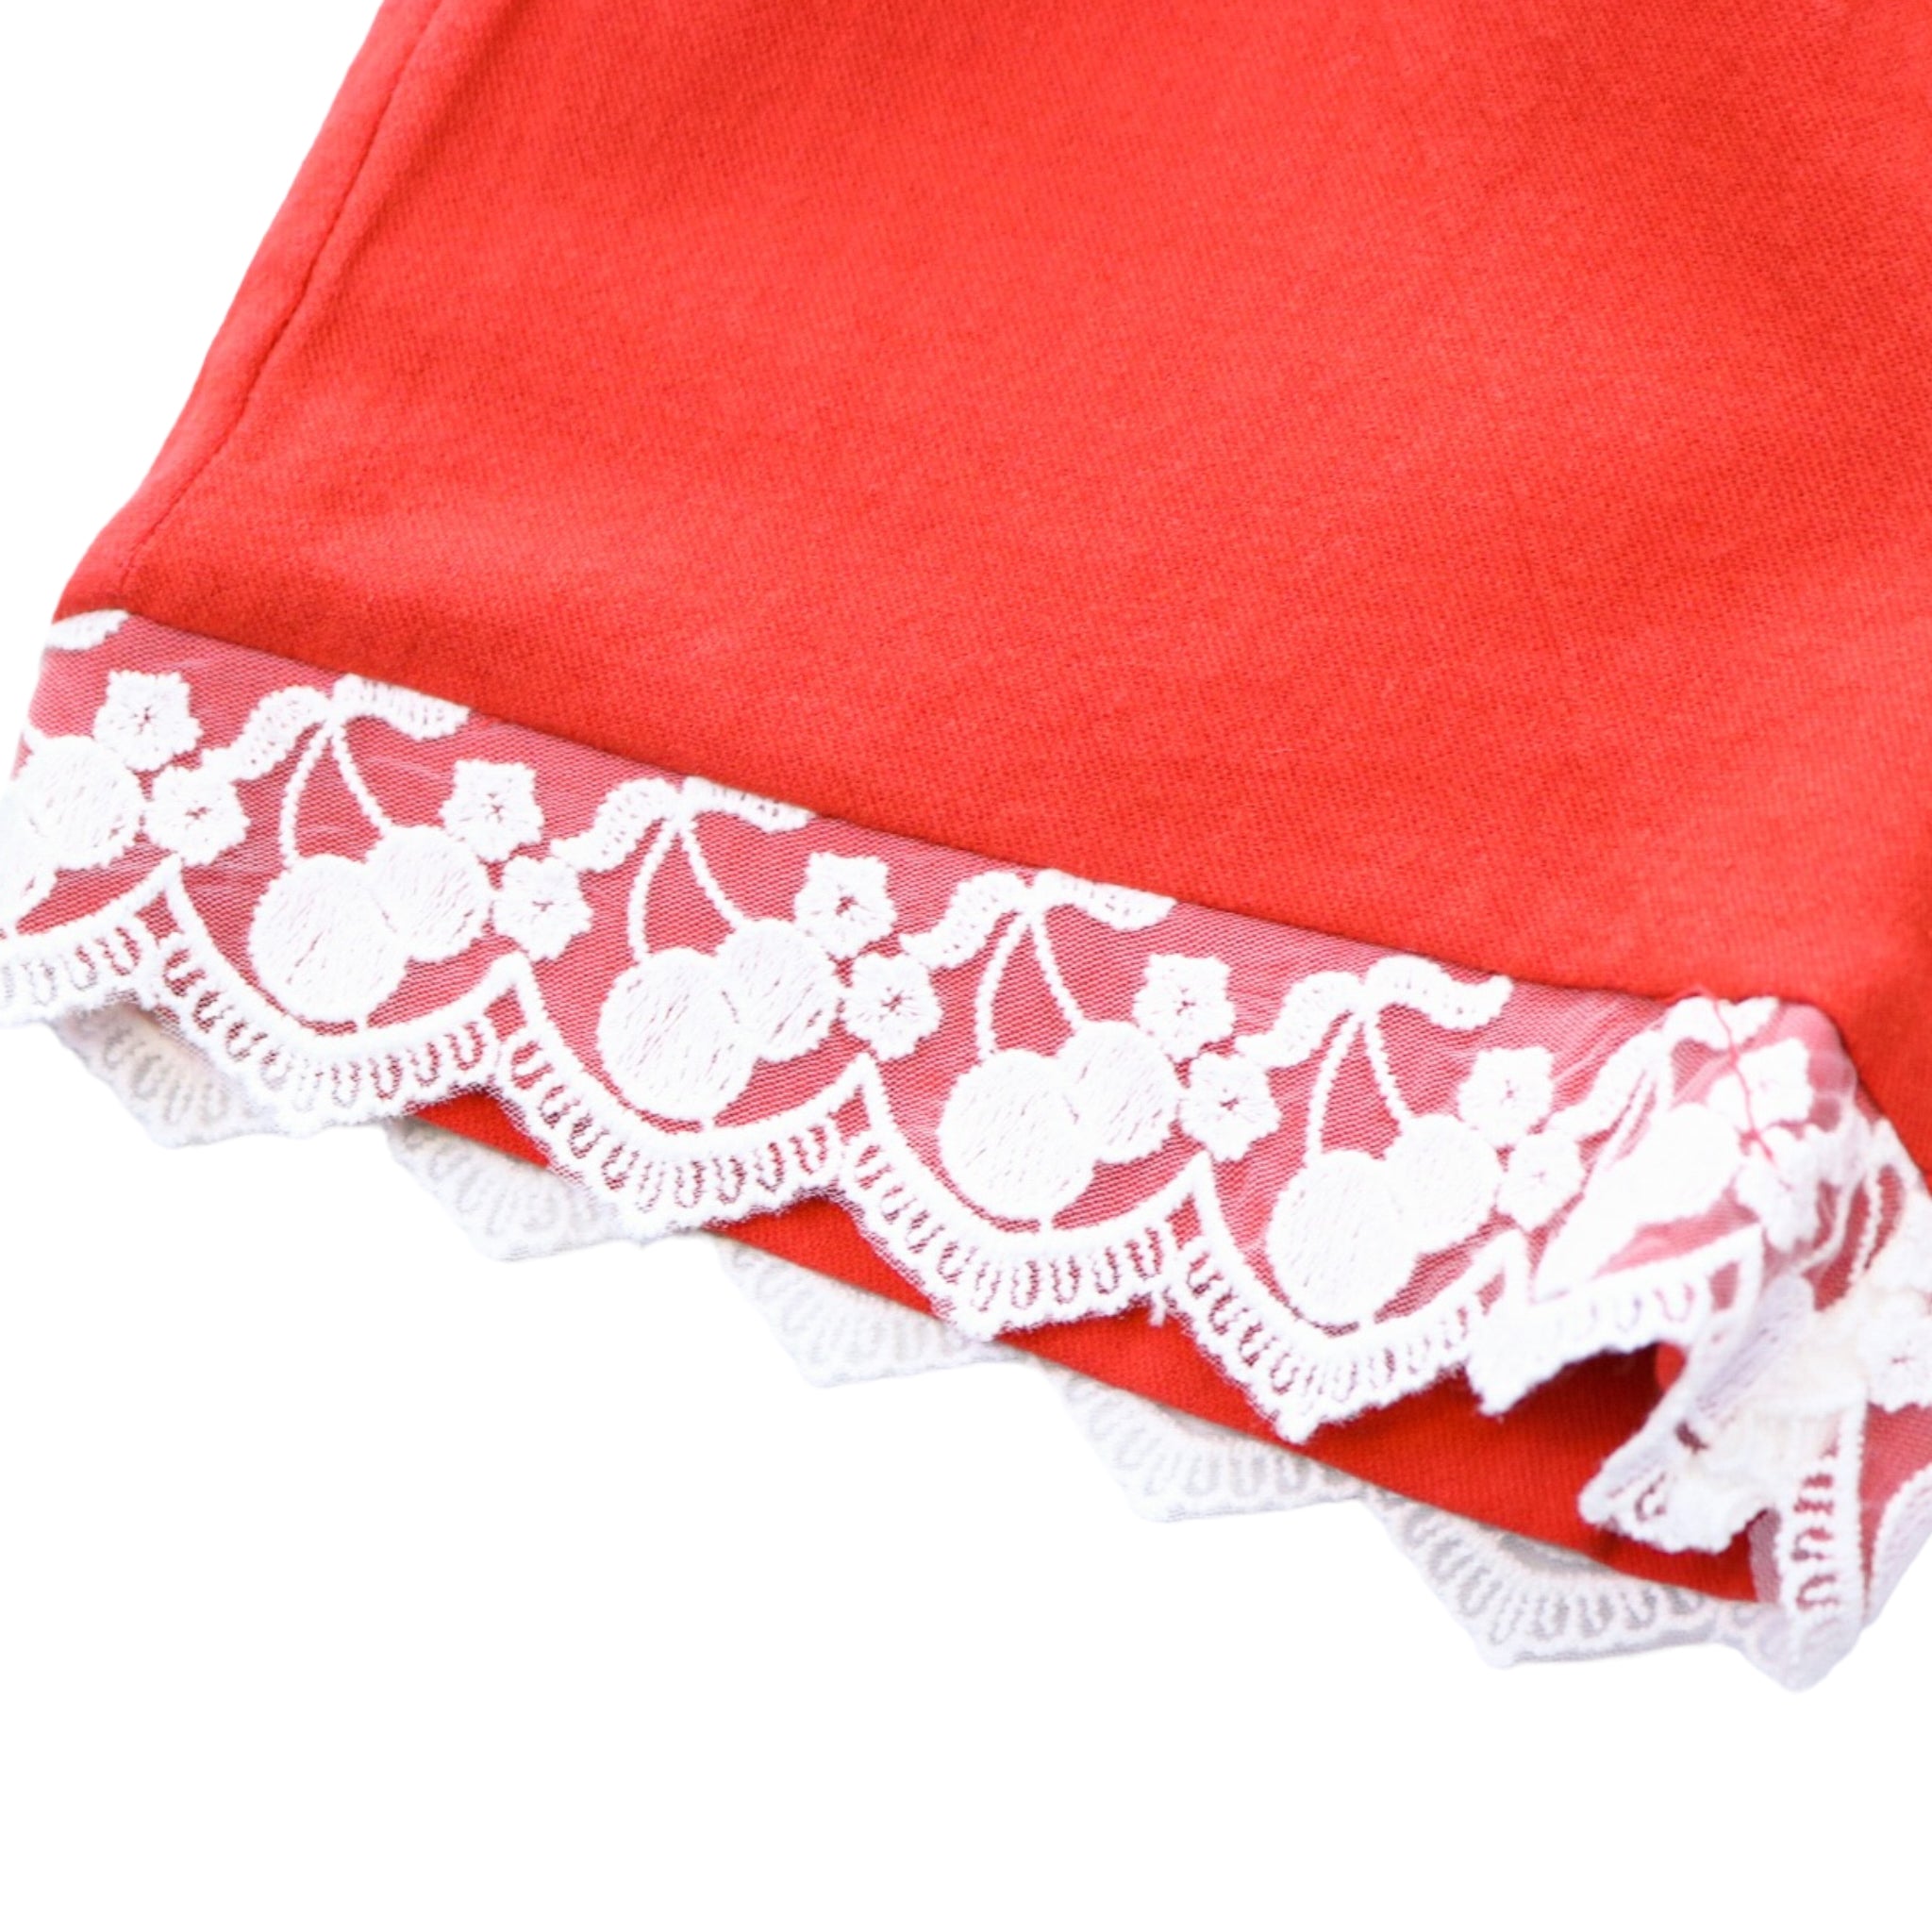 Elastic Waist Shorts w/Cherry Lace Hem Detail